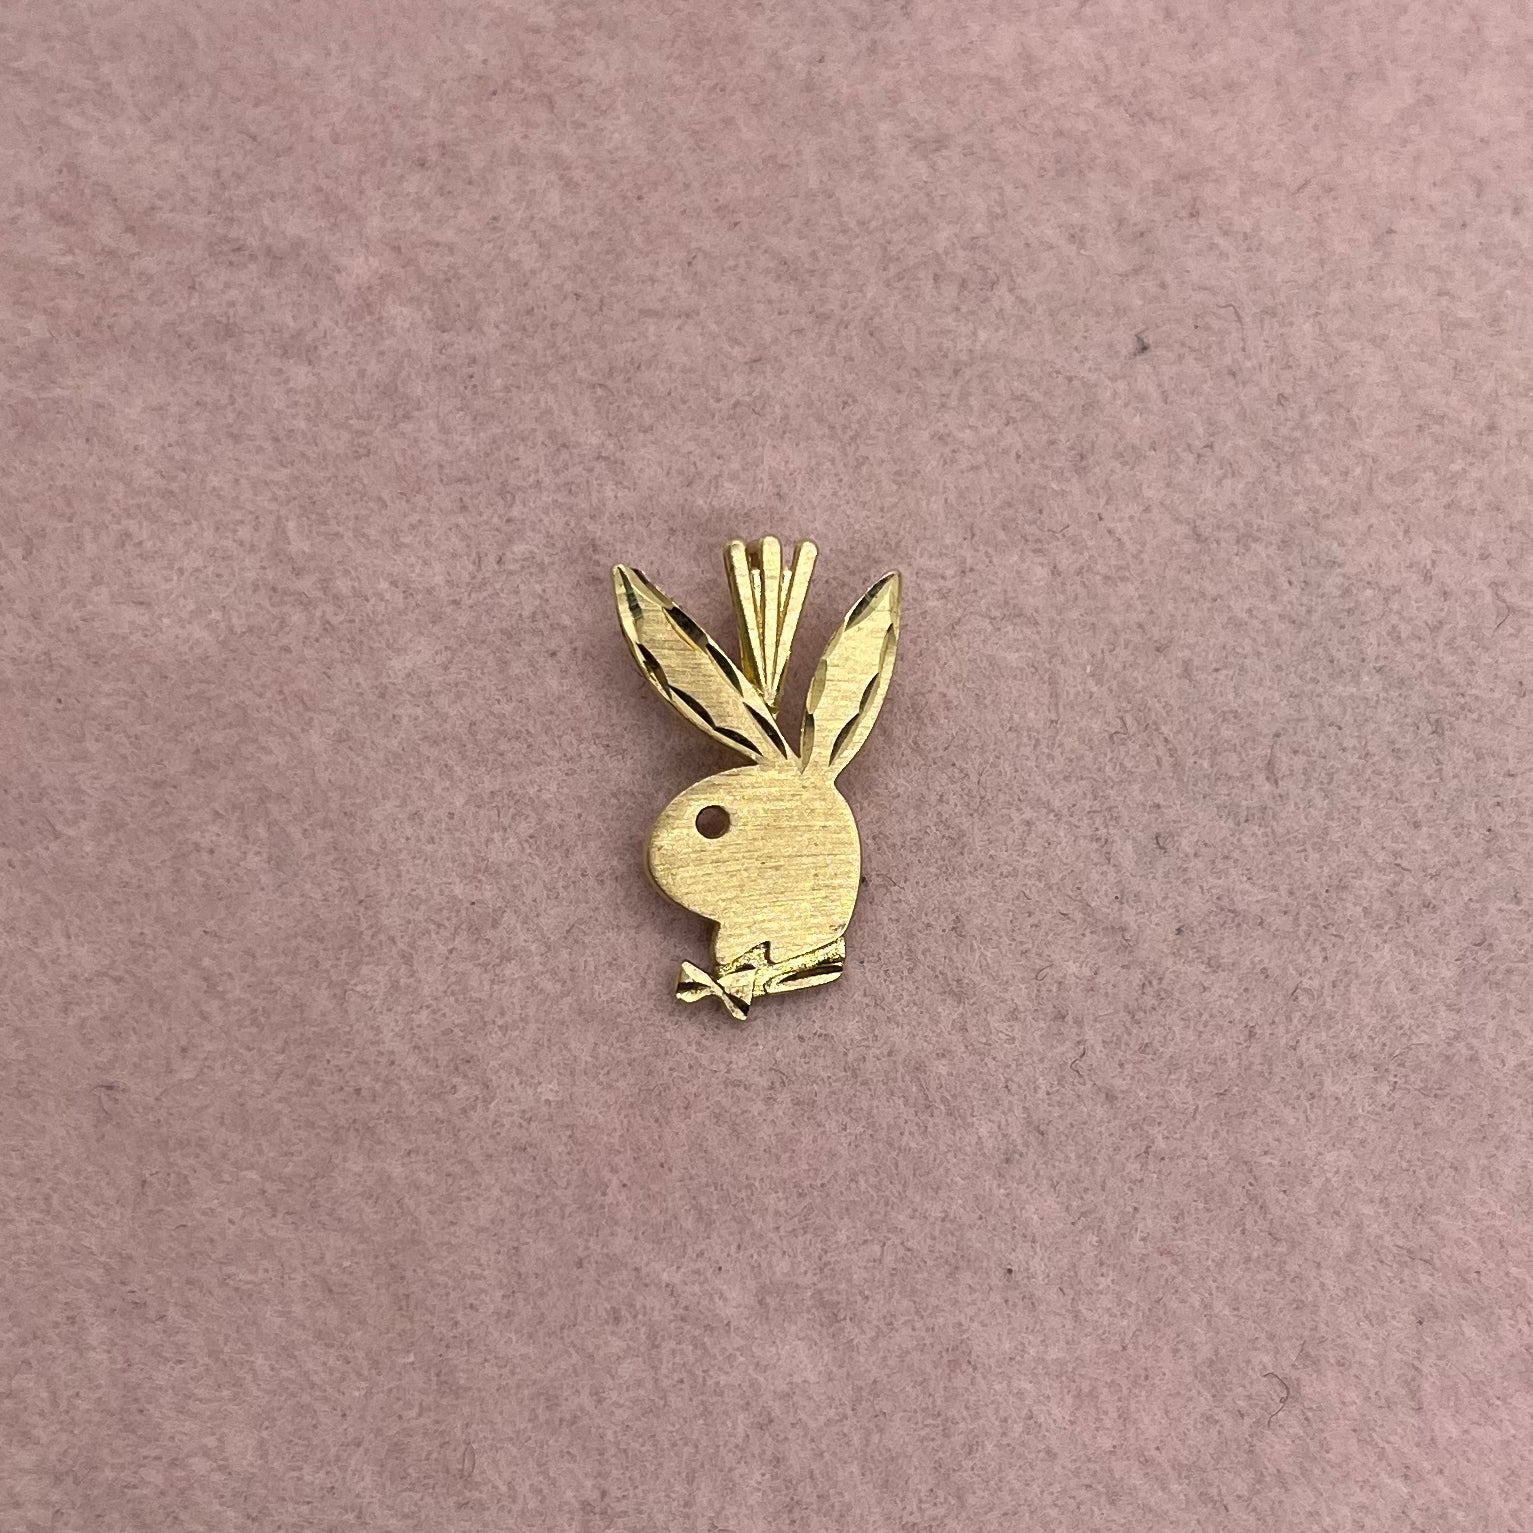 Playboy Bunny Pendant by Michael Anthony